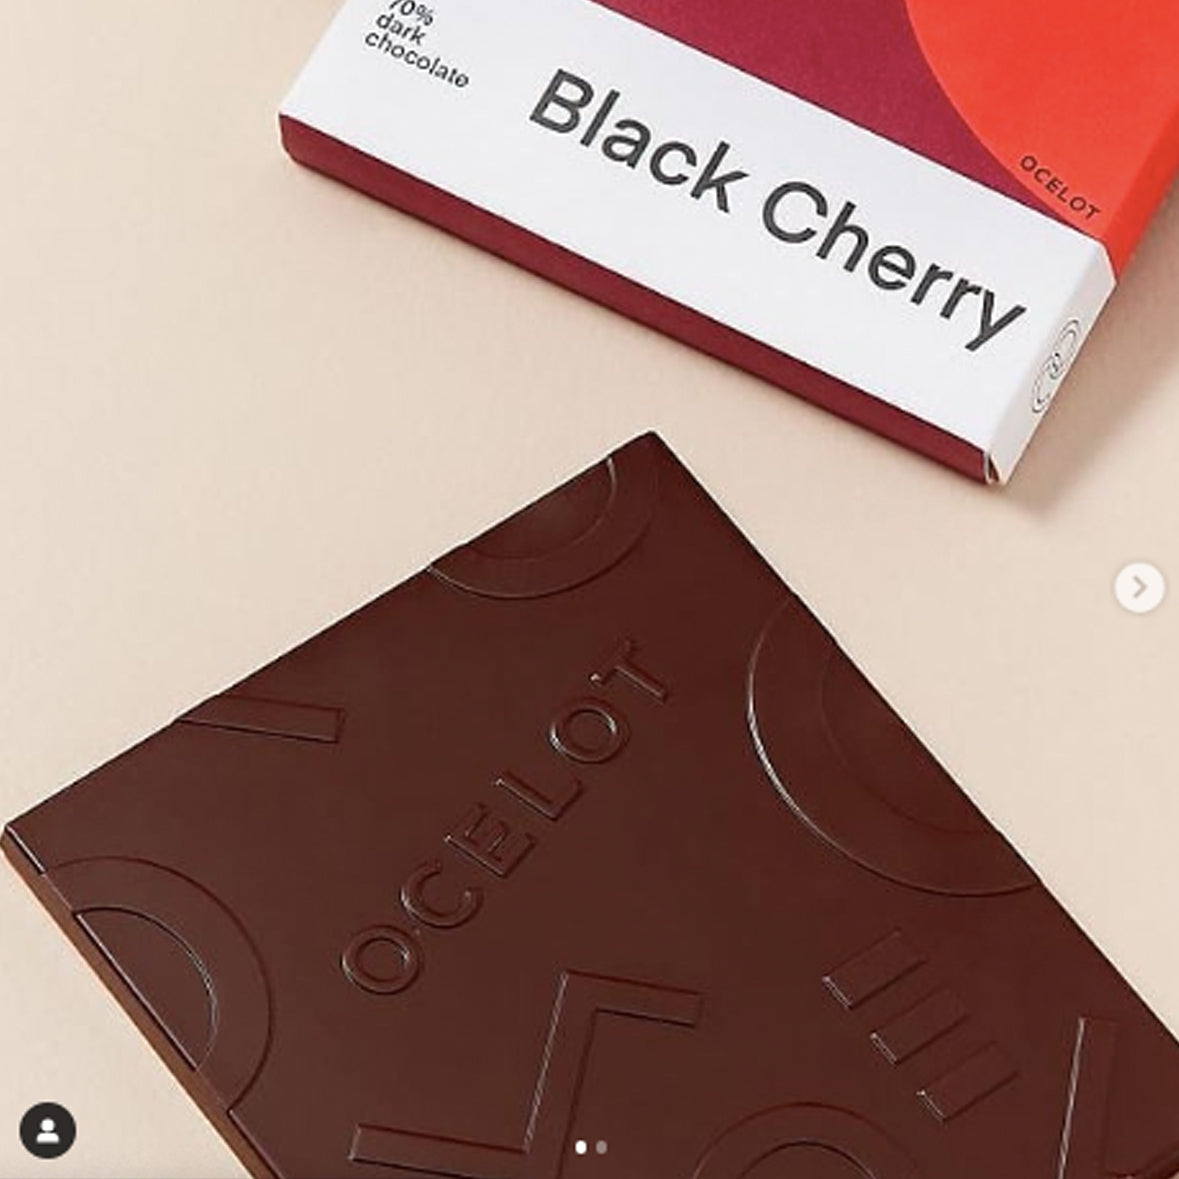 Black Cherry Chocolate by Ocelot